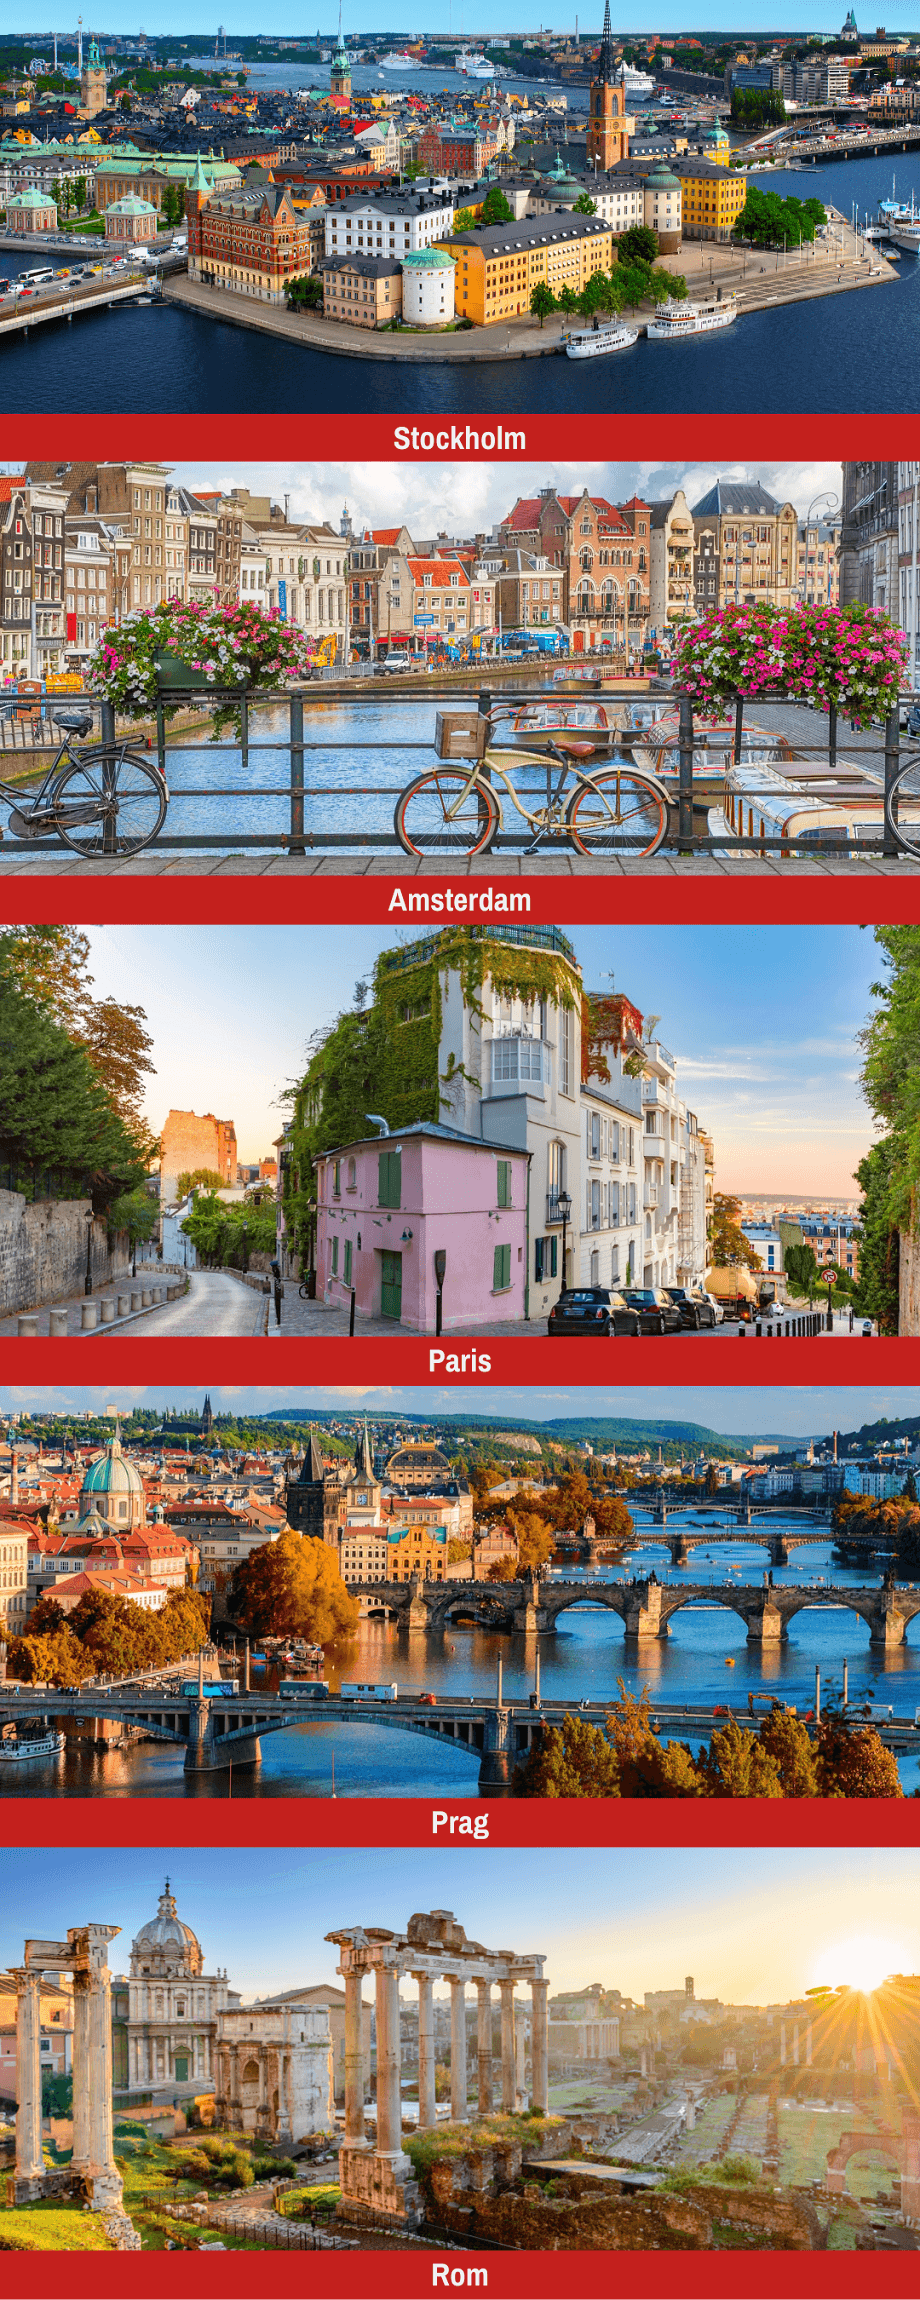 Stockholm, Amsterdam, Paris, Prag, Rom